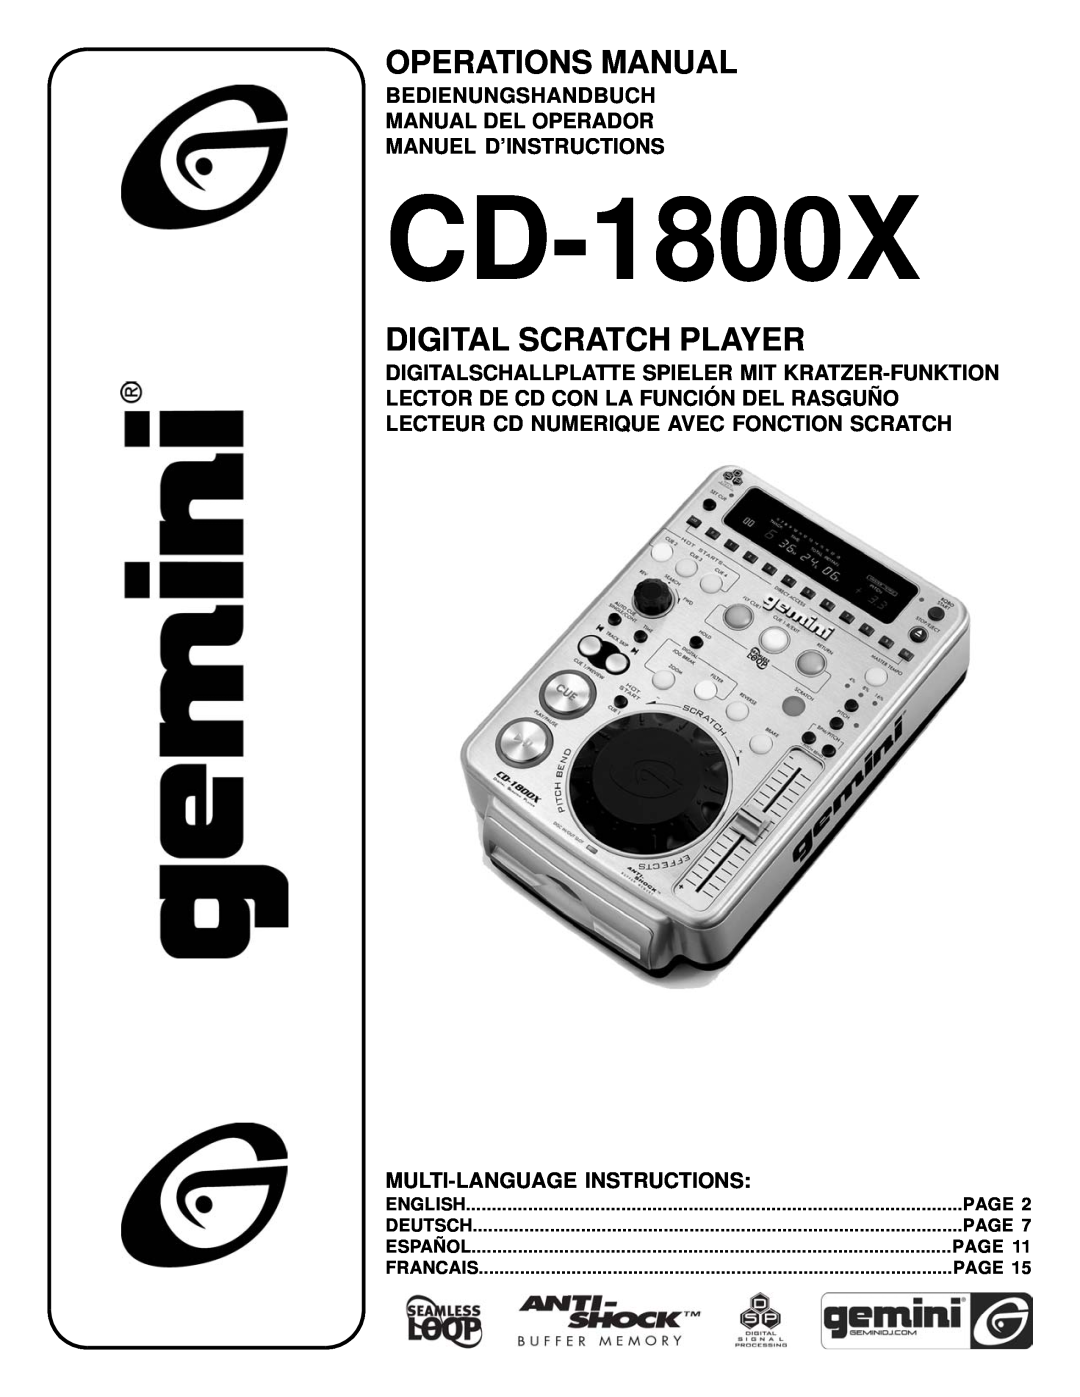 Gemini CD-1800X manual Operations Manual, Digital Scratch Player, Bedienungshandbuch Manual Del Operador, Page, English 